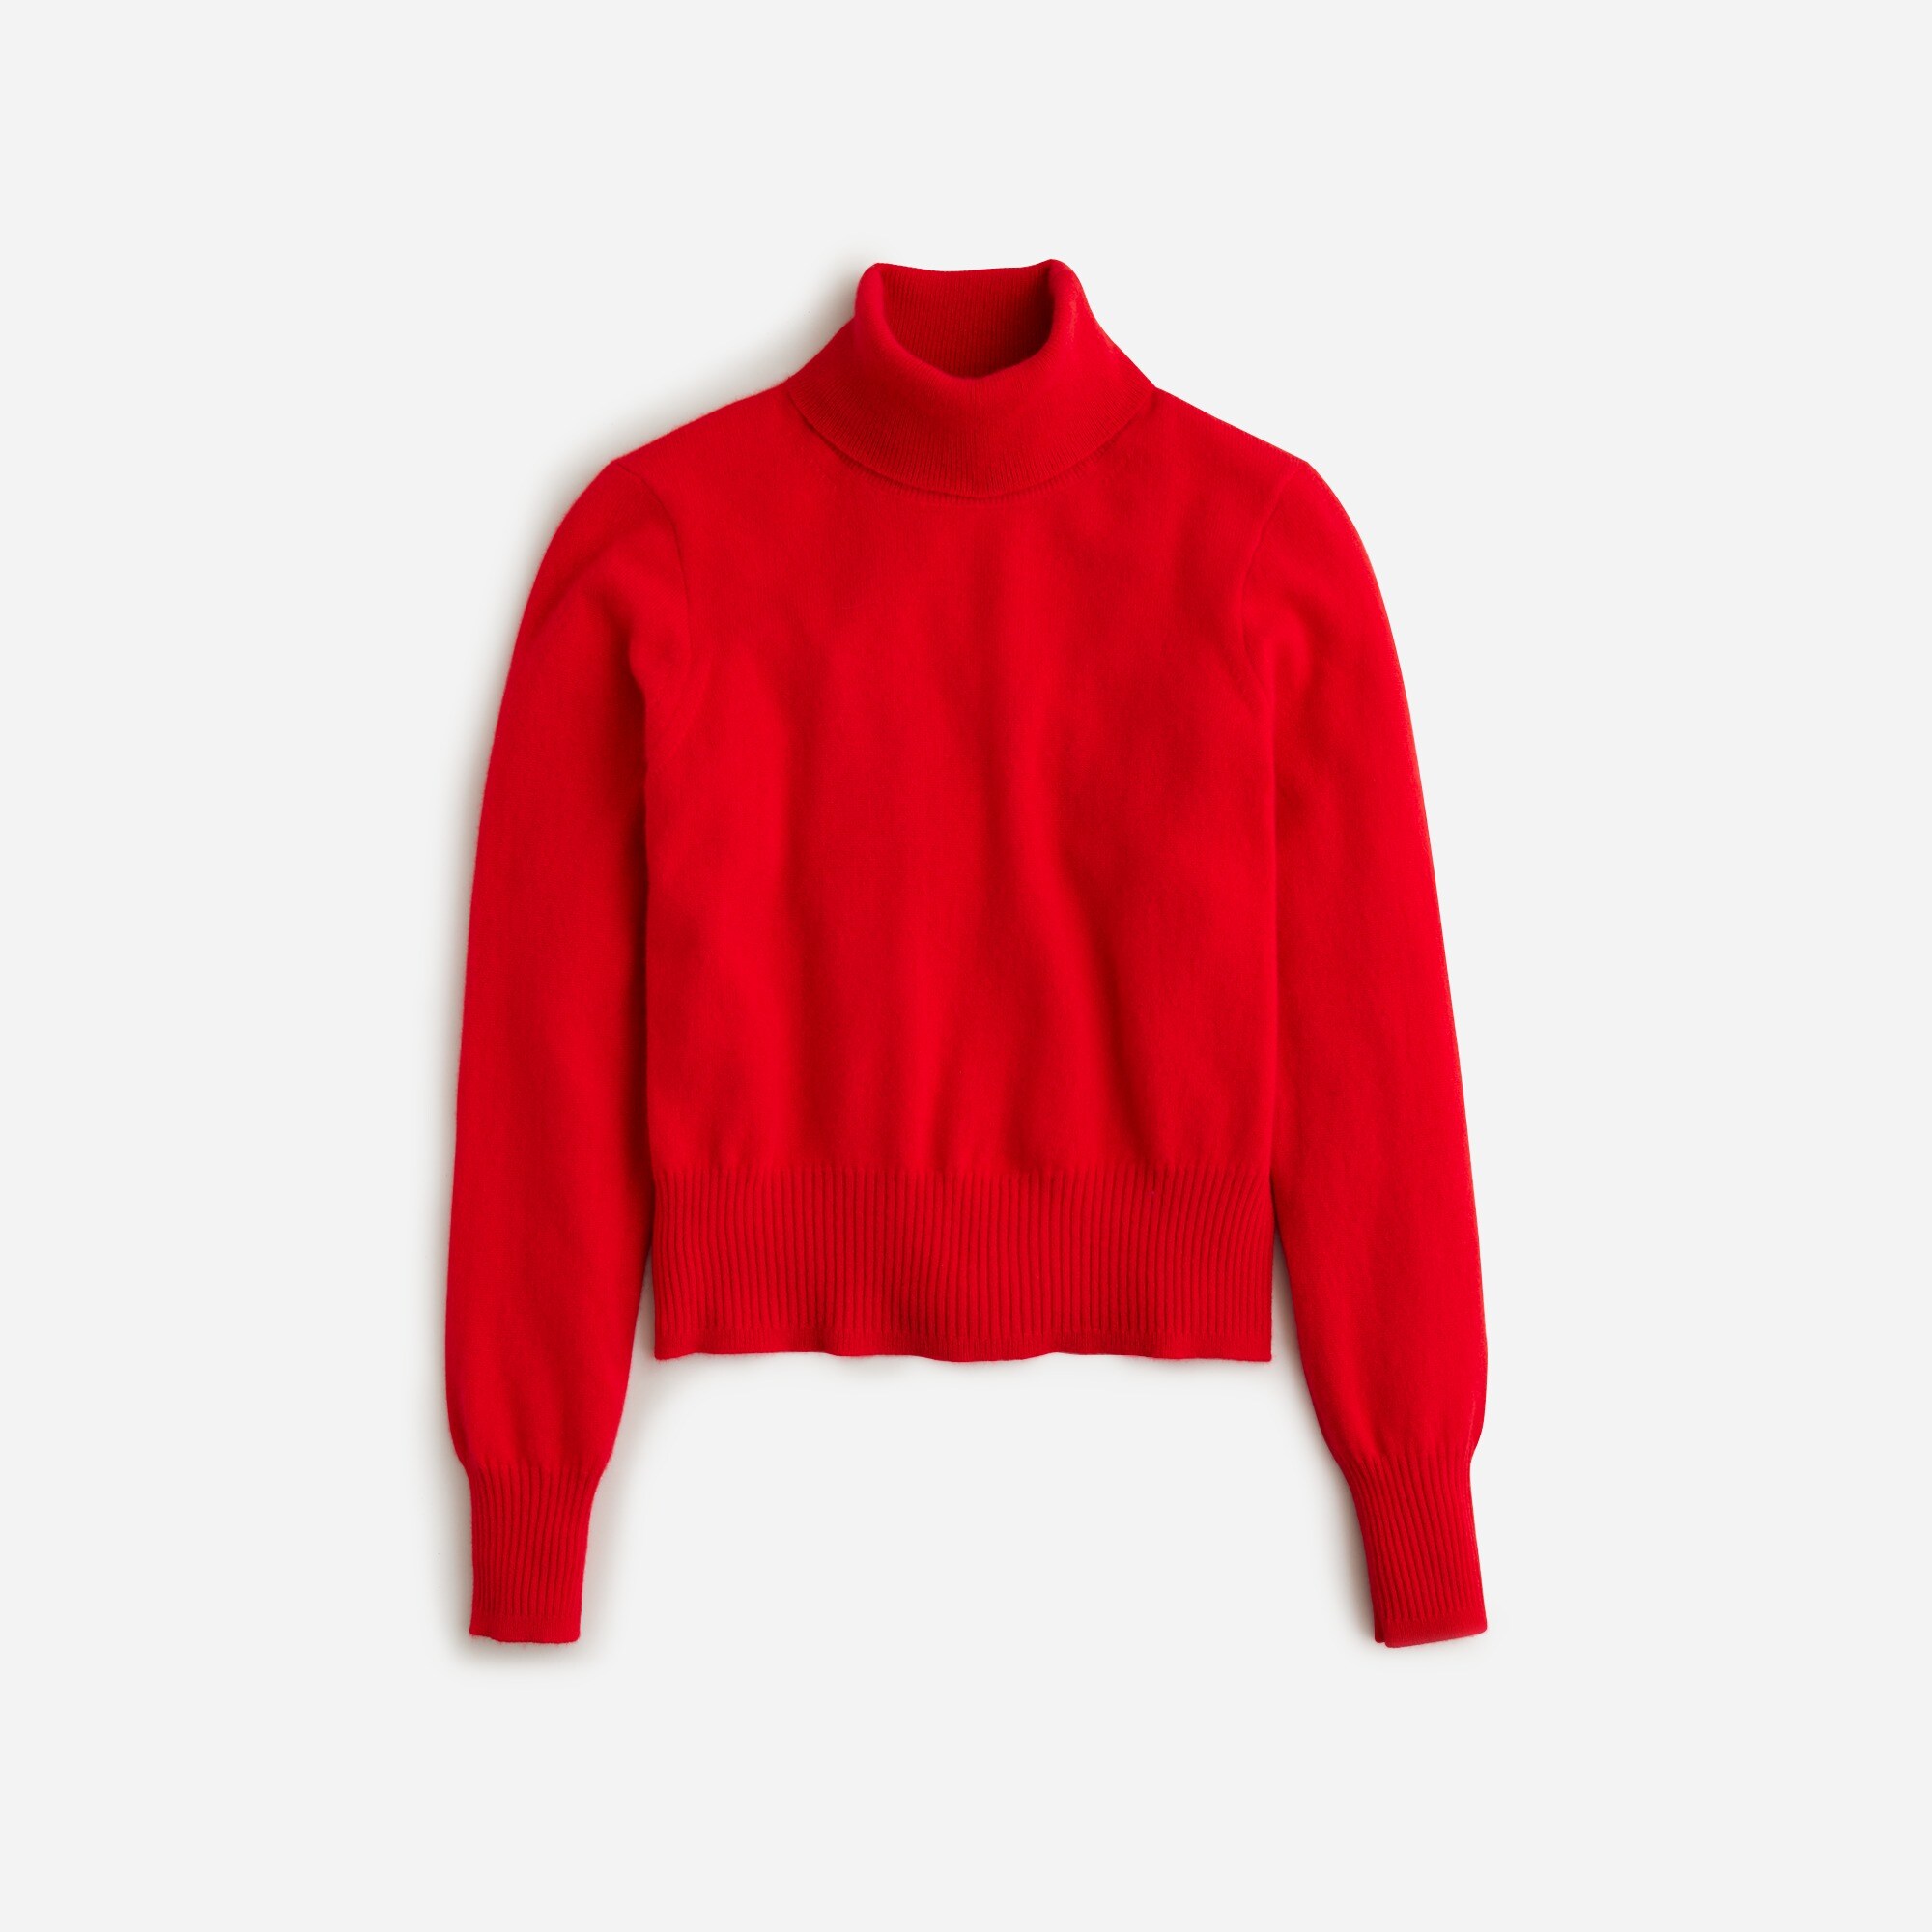  Cashmere shrunken turtleneck sweater